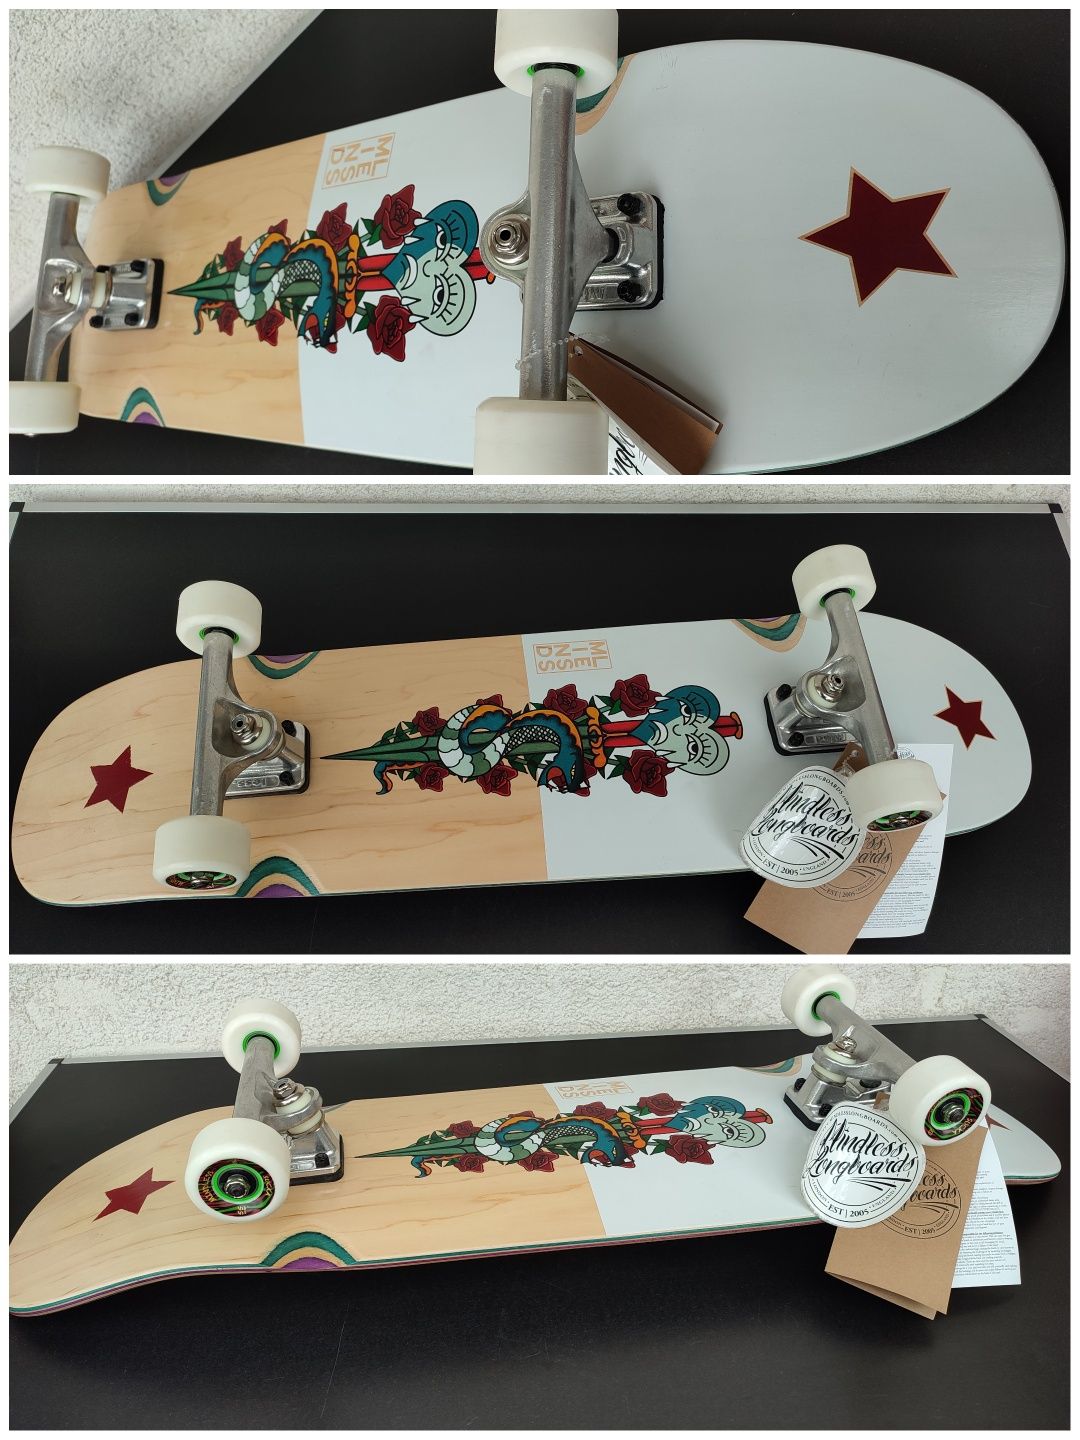 skateboard mindless longboard Cruiser Mindless Flash Snake placa retro